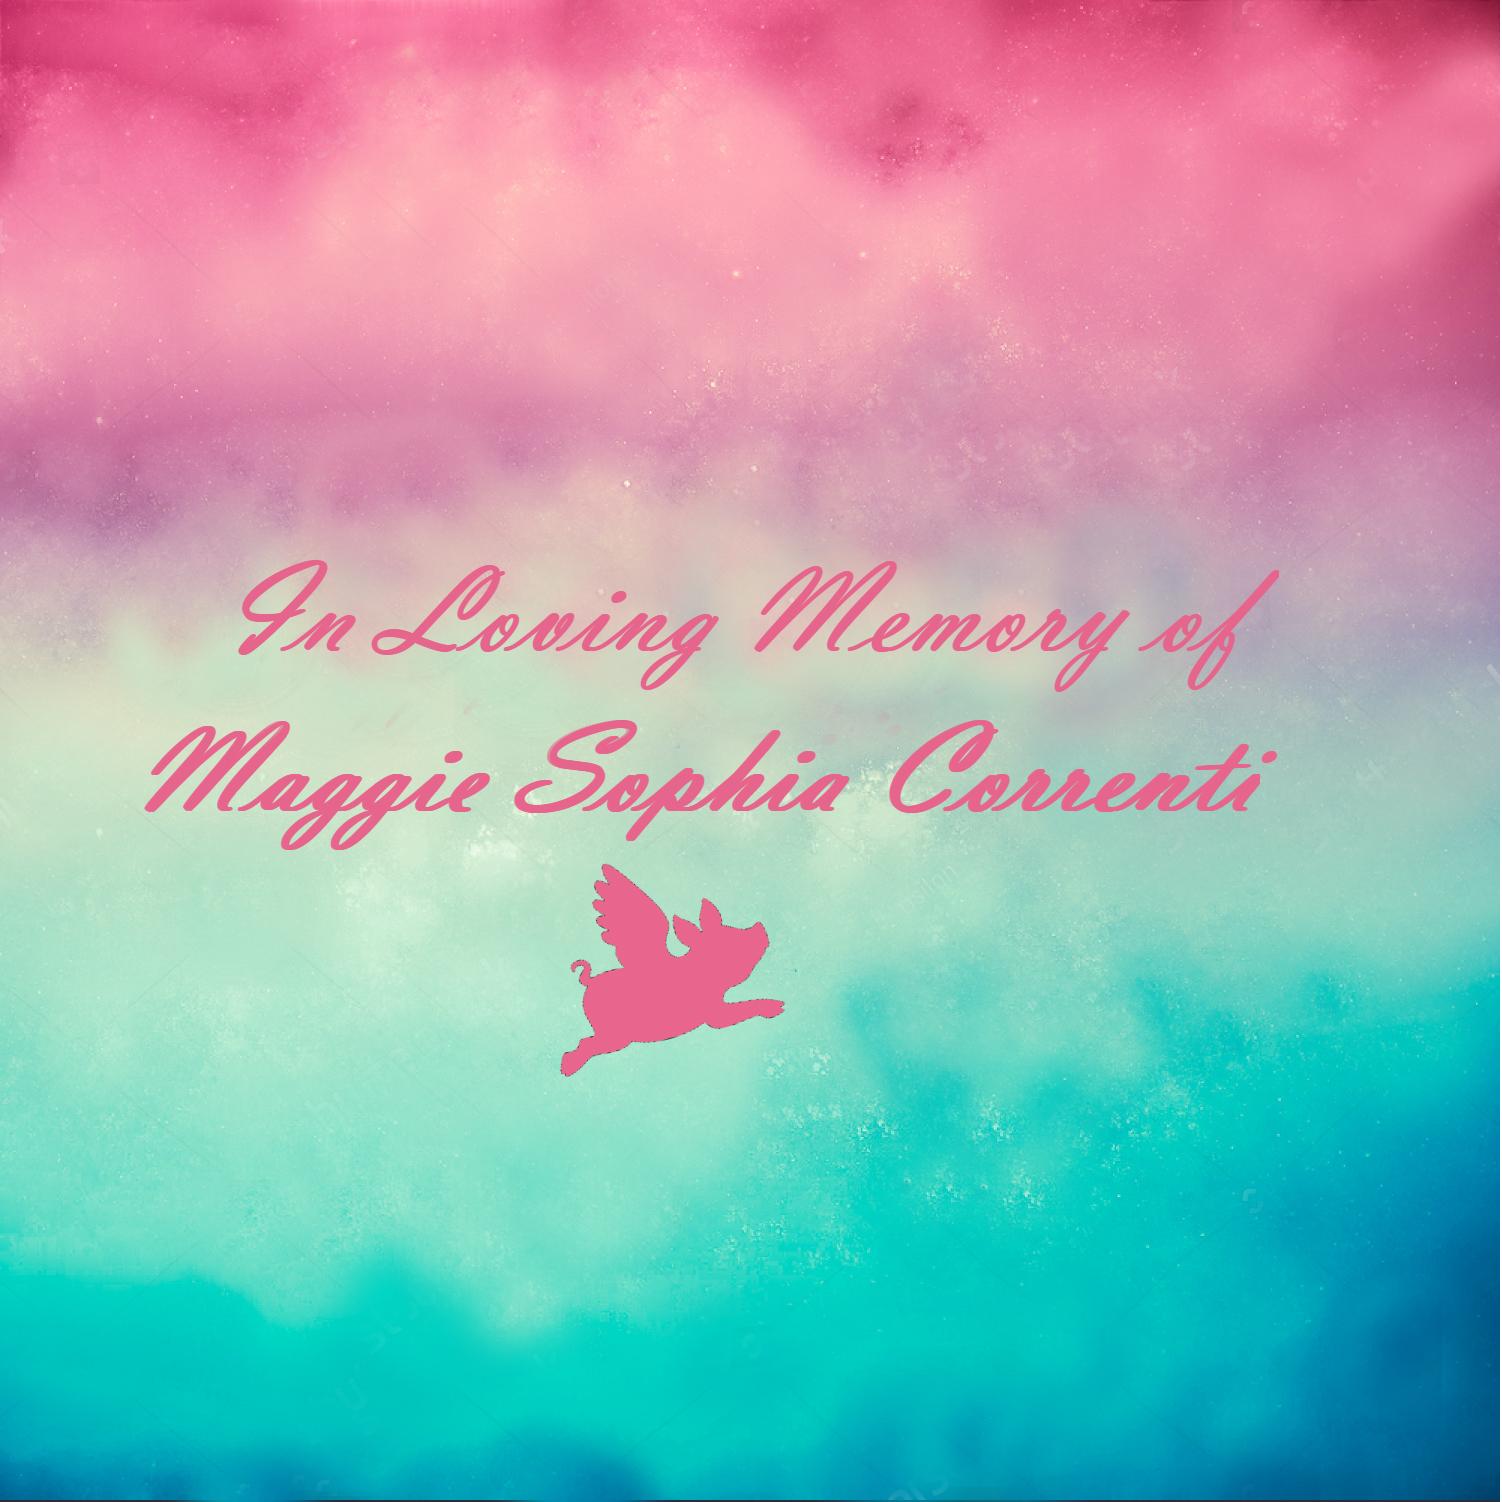 Maggie's Run Memorial Fundraising Dinner